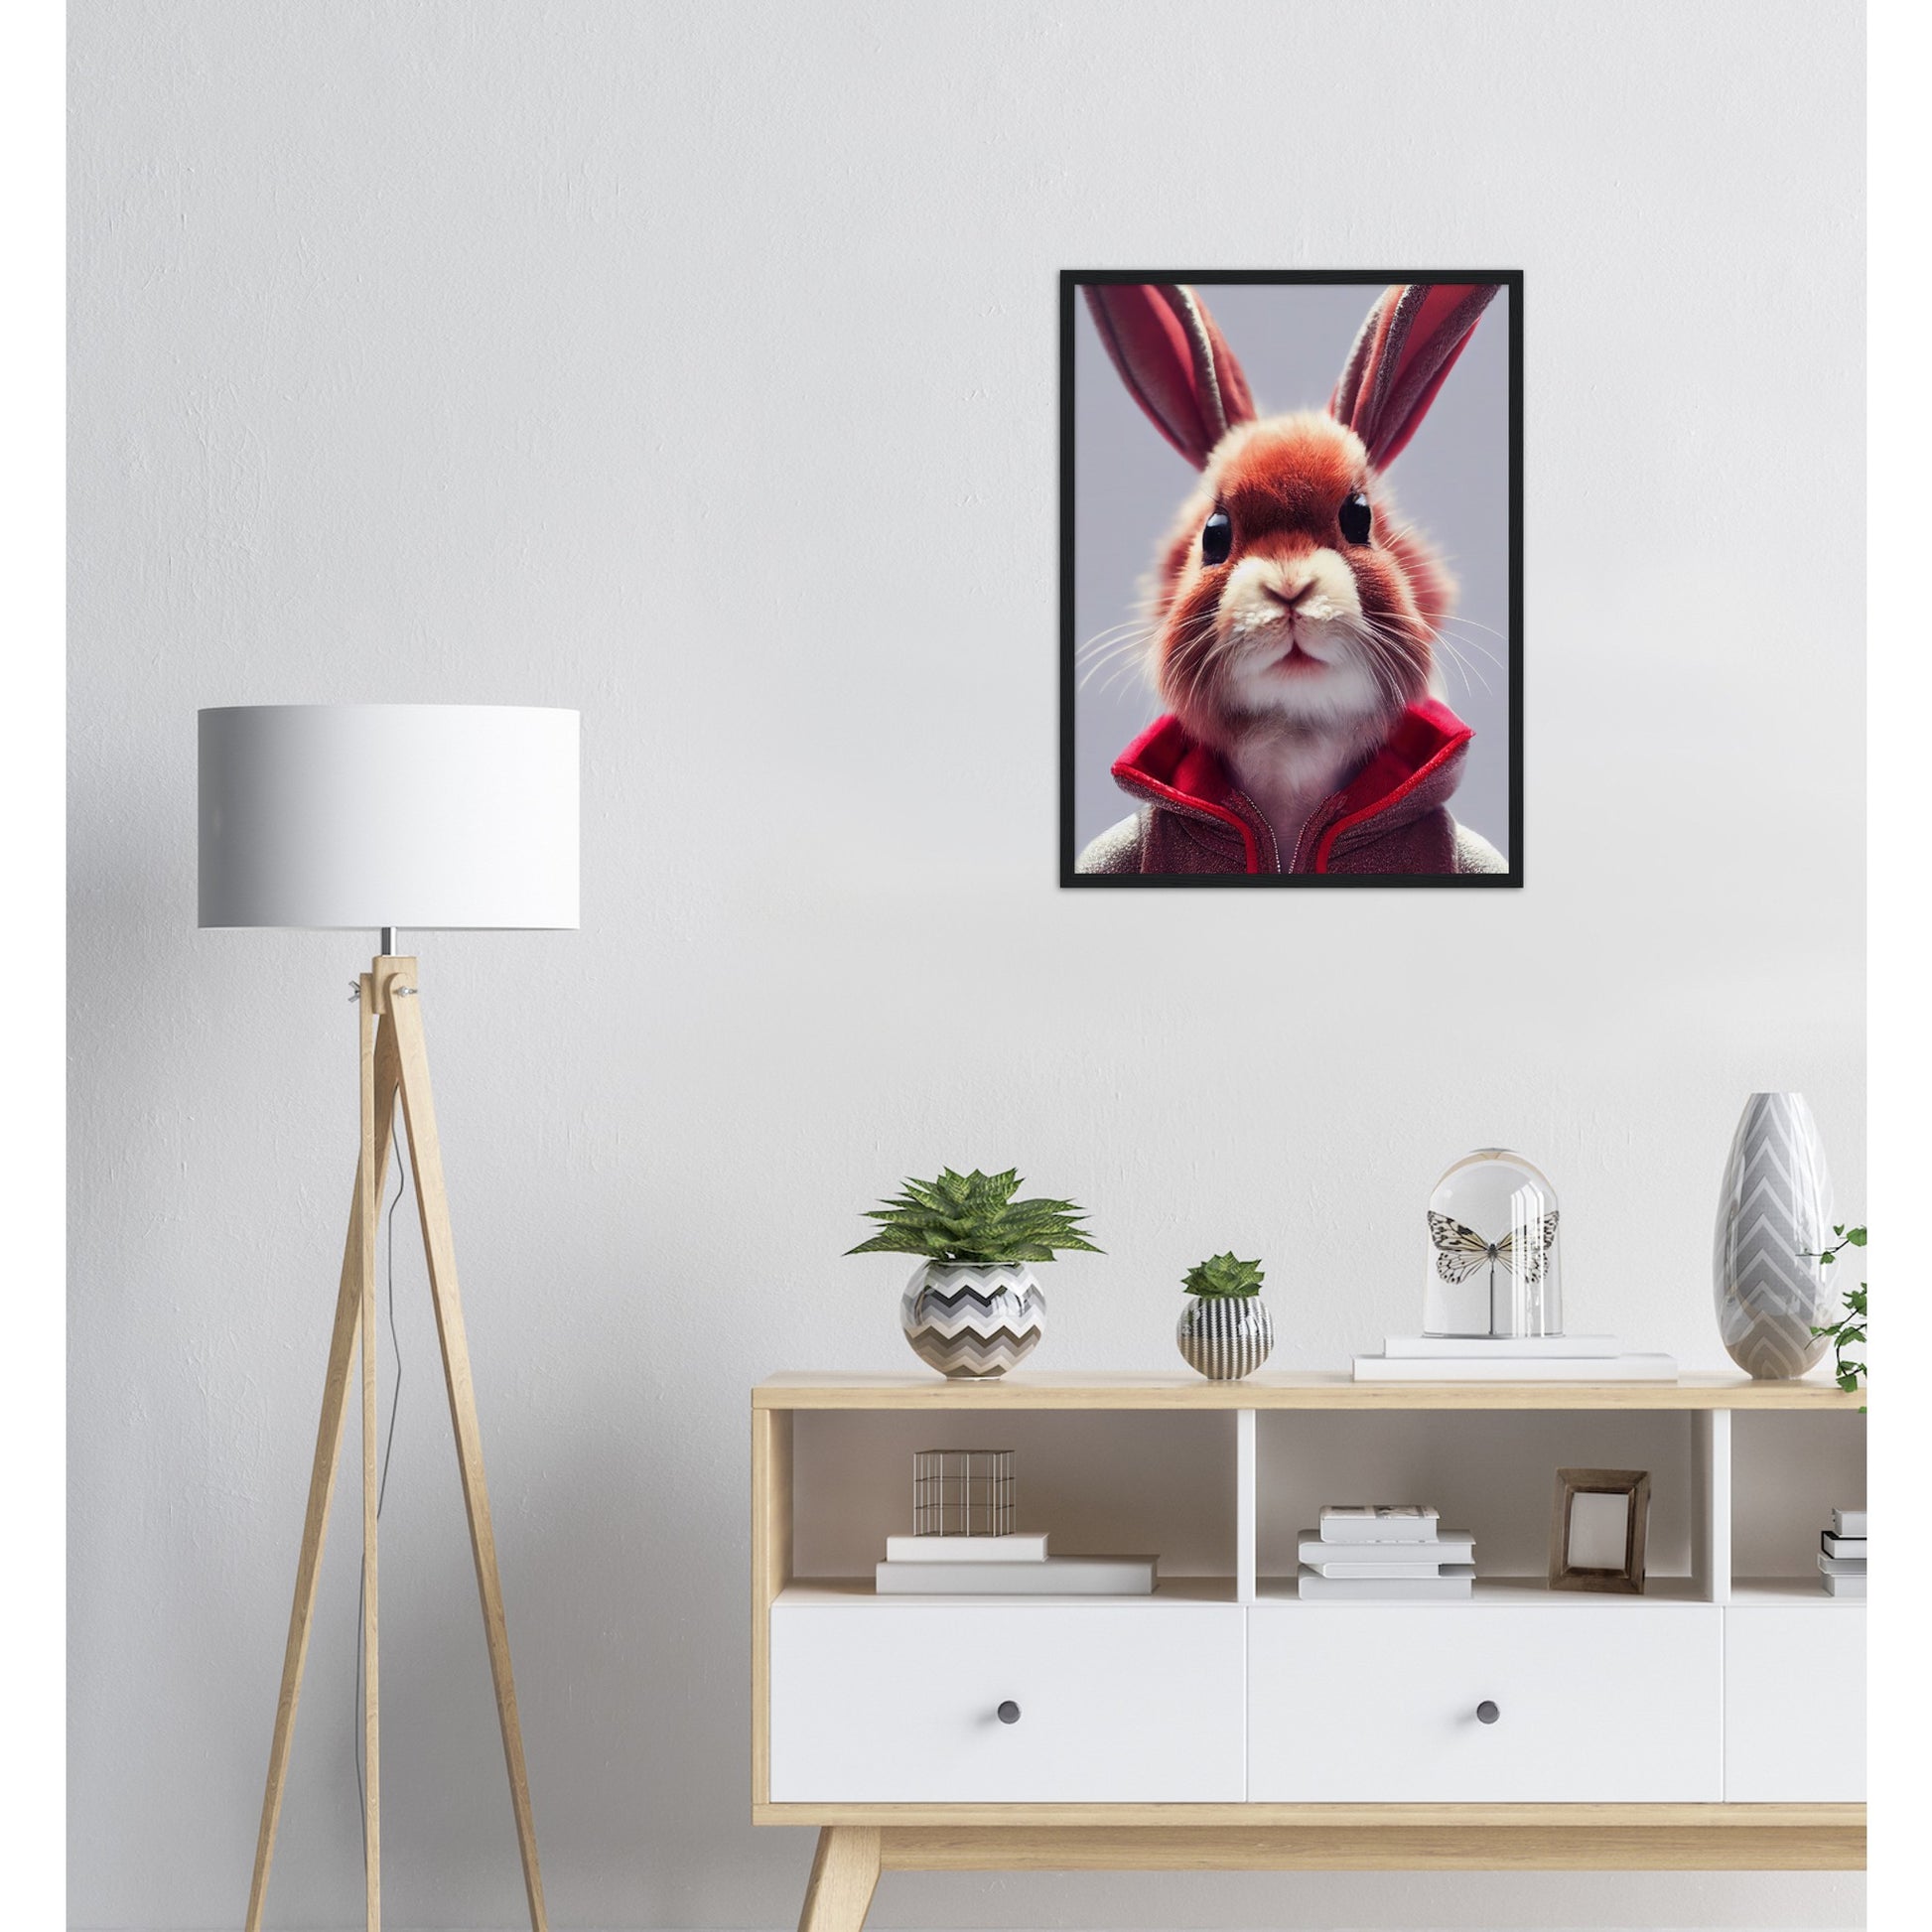 Poster mit Rahmen (Holz)- Museumsqualität - Bunny in grey red tracksuit - "Julius" - personalized mug - customized mug - Cute rabbit - Marke:- Pixelboys - Brand - Art Prints - Marke - Wandkunst - Papierstärke: 250g/qm - Wall Art - Bunny crey - Skater Betty - Hasen Gang - Original - Künstler:Pixelboys - Poster with frame - Office Poster - Trend - Wandschmuck - Atelier USA - 